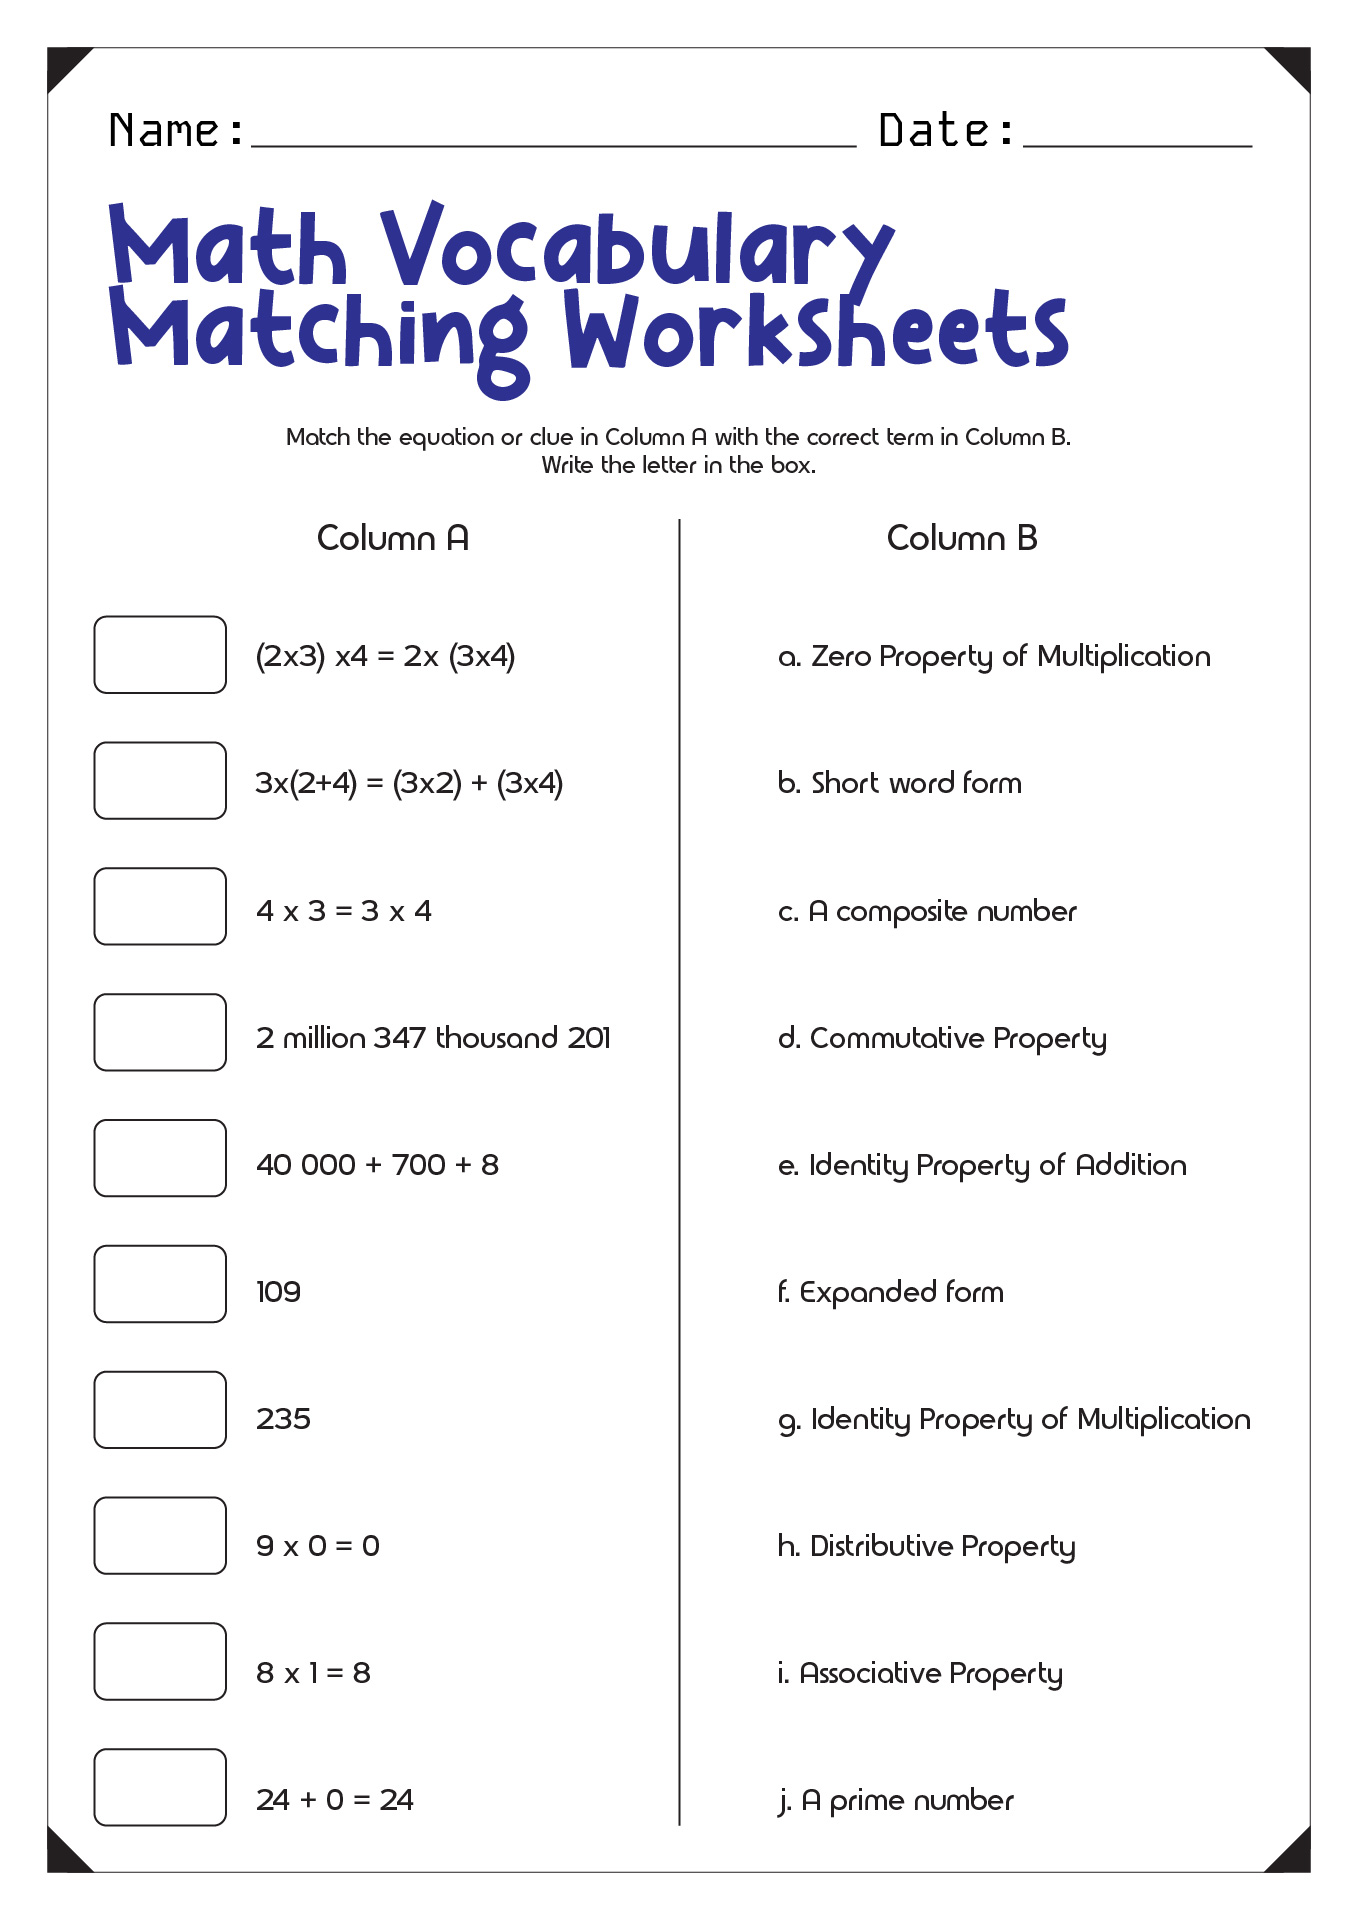 math-vocabulary-worksheet